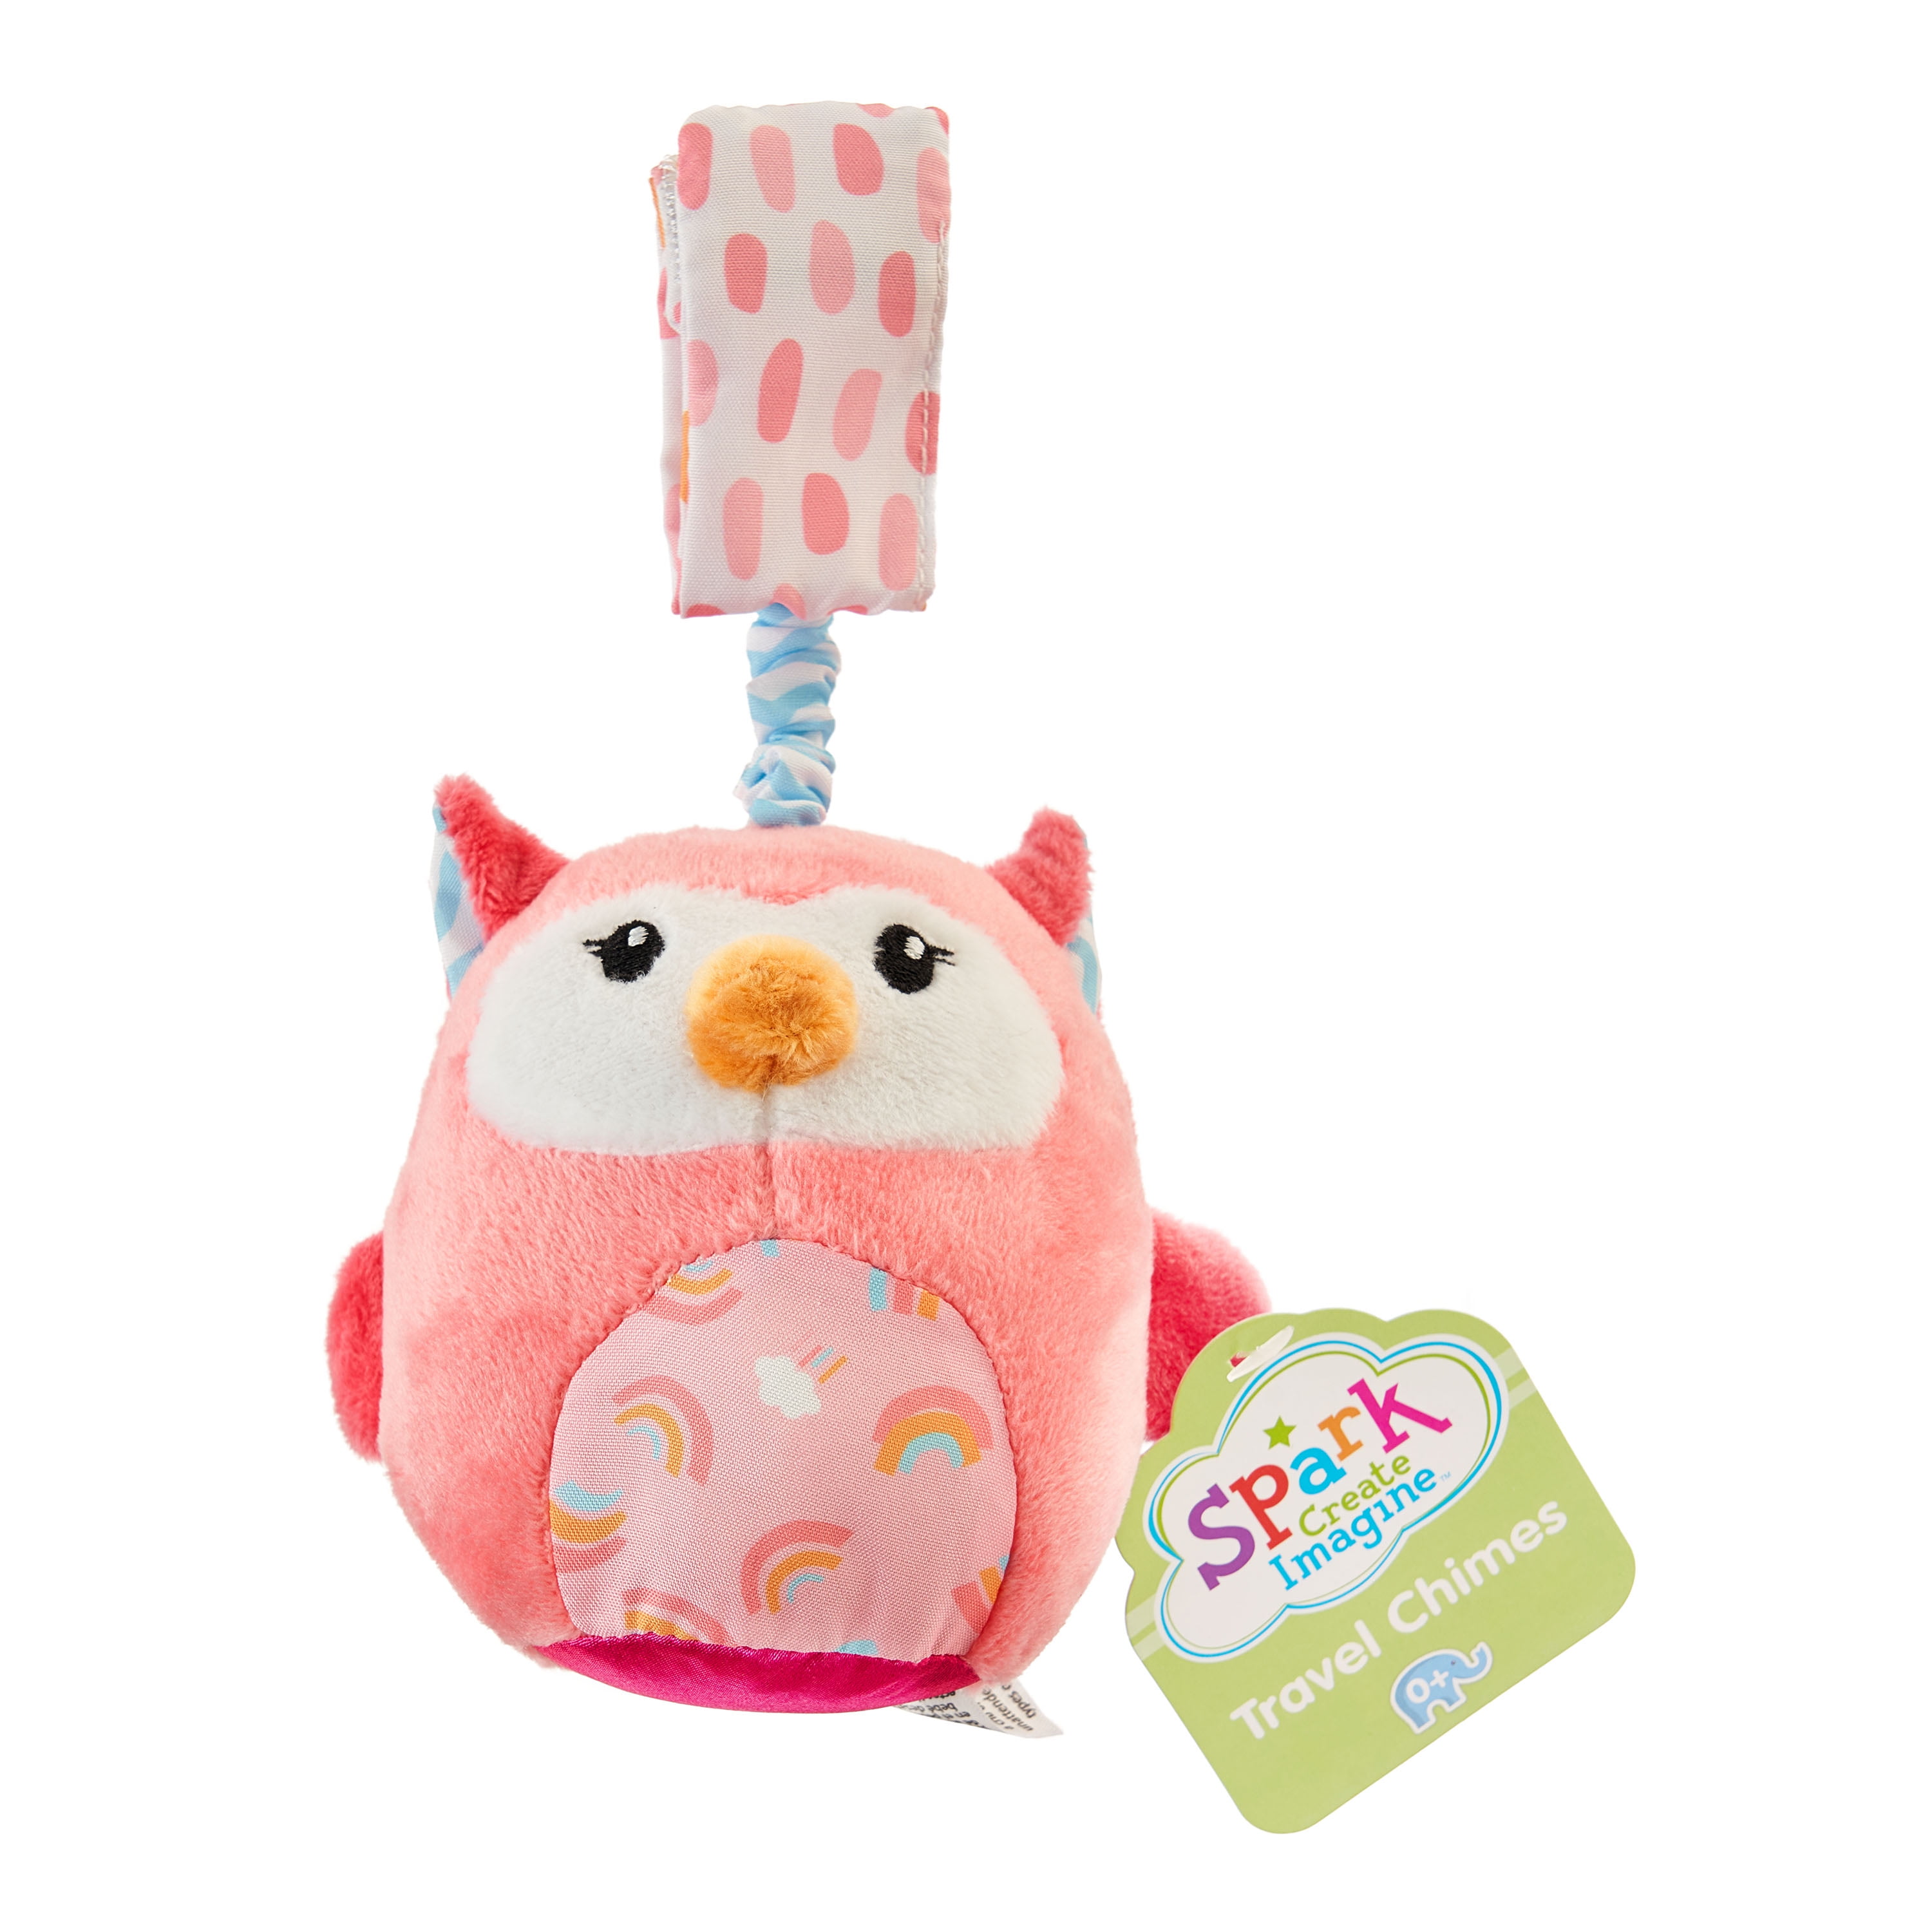 Spark Create Imagine Travel Chime, Pink Owl